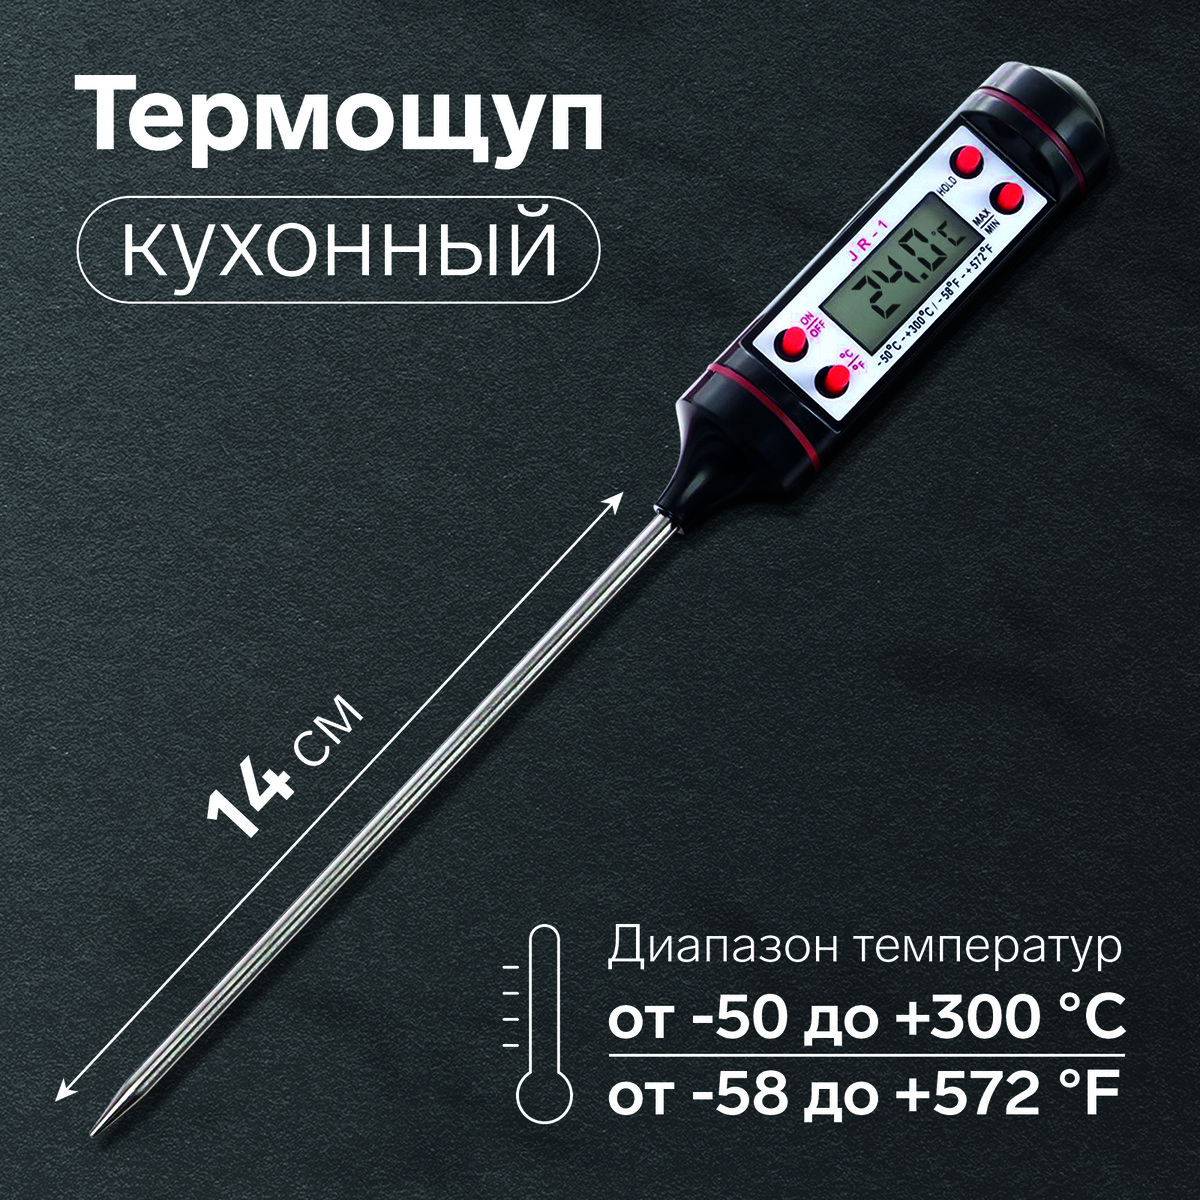 Термощуп кухонный jr-1, электронный, черный термометр термощуп для пищи электронный на батарейках доляна в коробке